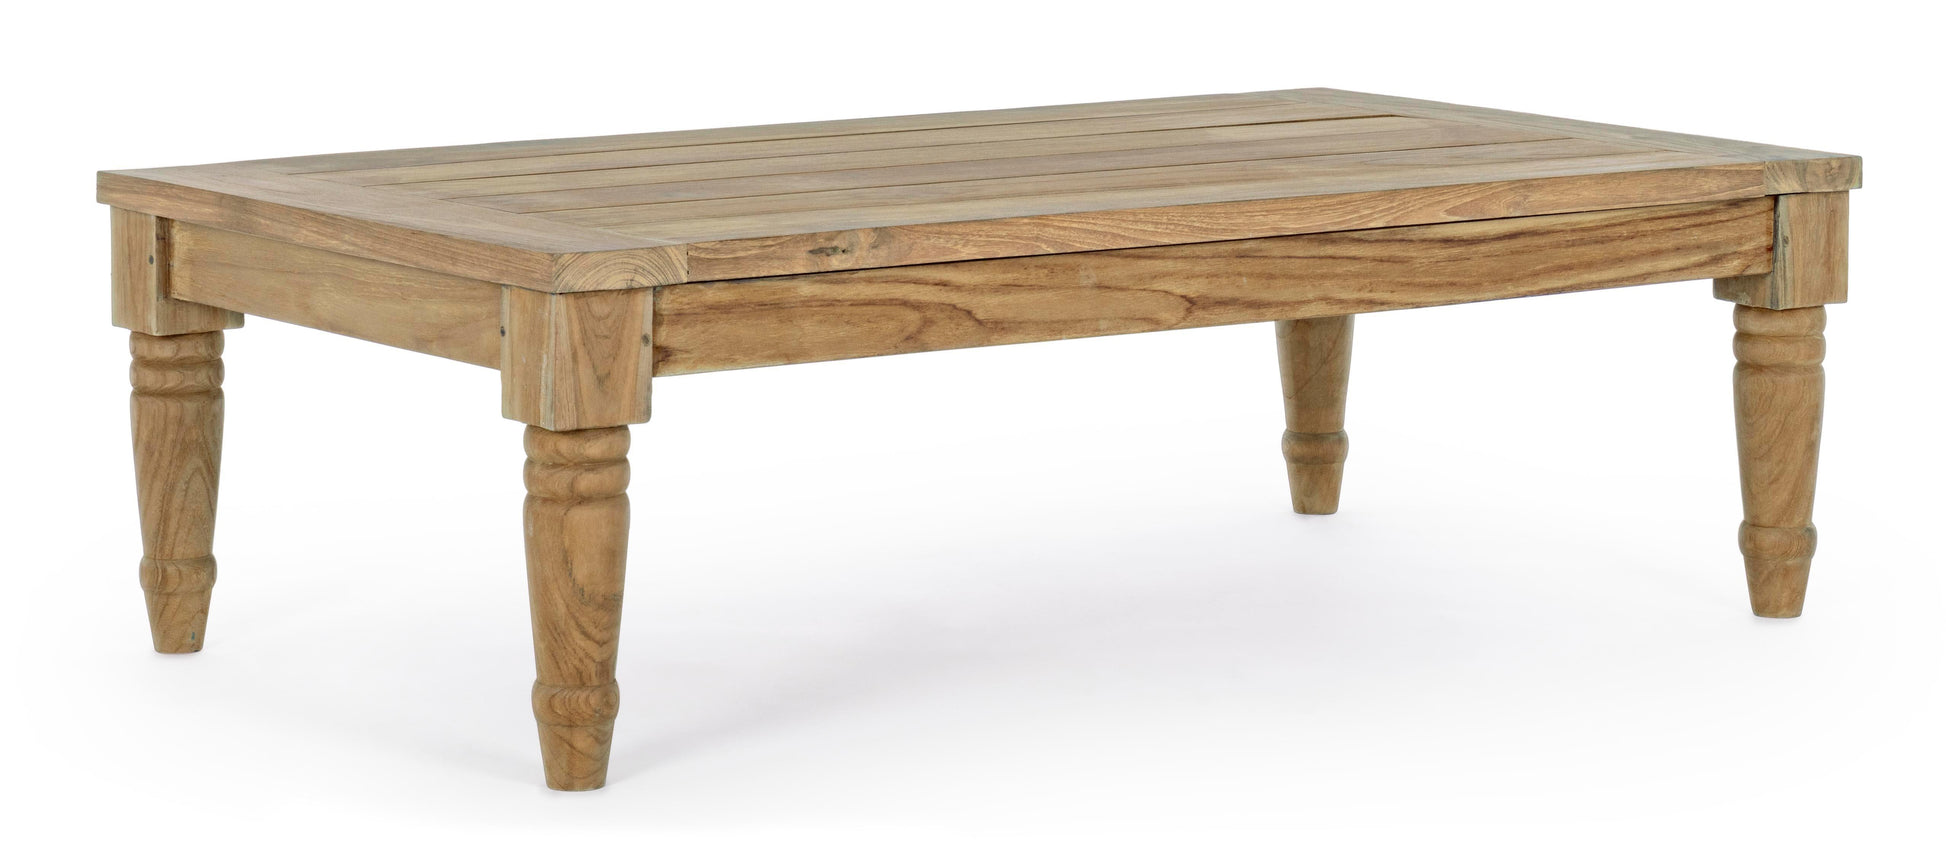 Tavolino etnico 115x65 in legno teak naturale finitura rustica - SPEDIZIONE GRATUITA- lapagoda.net